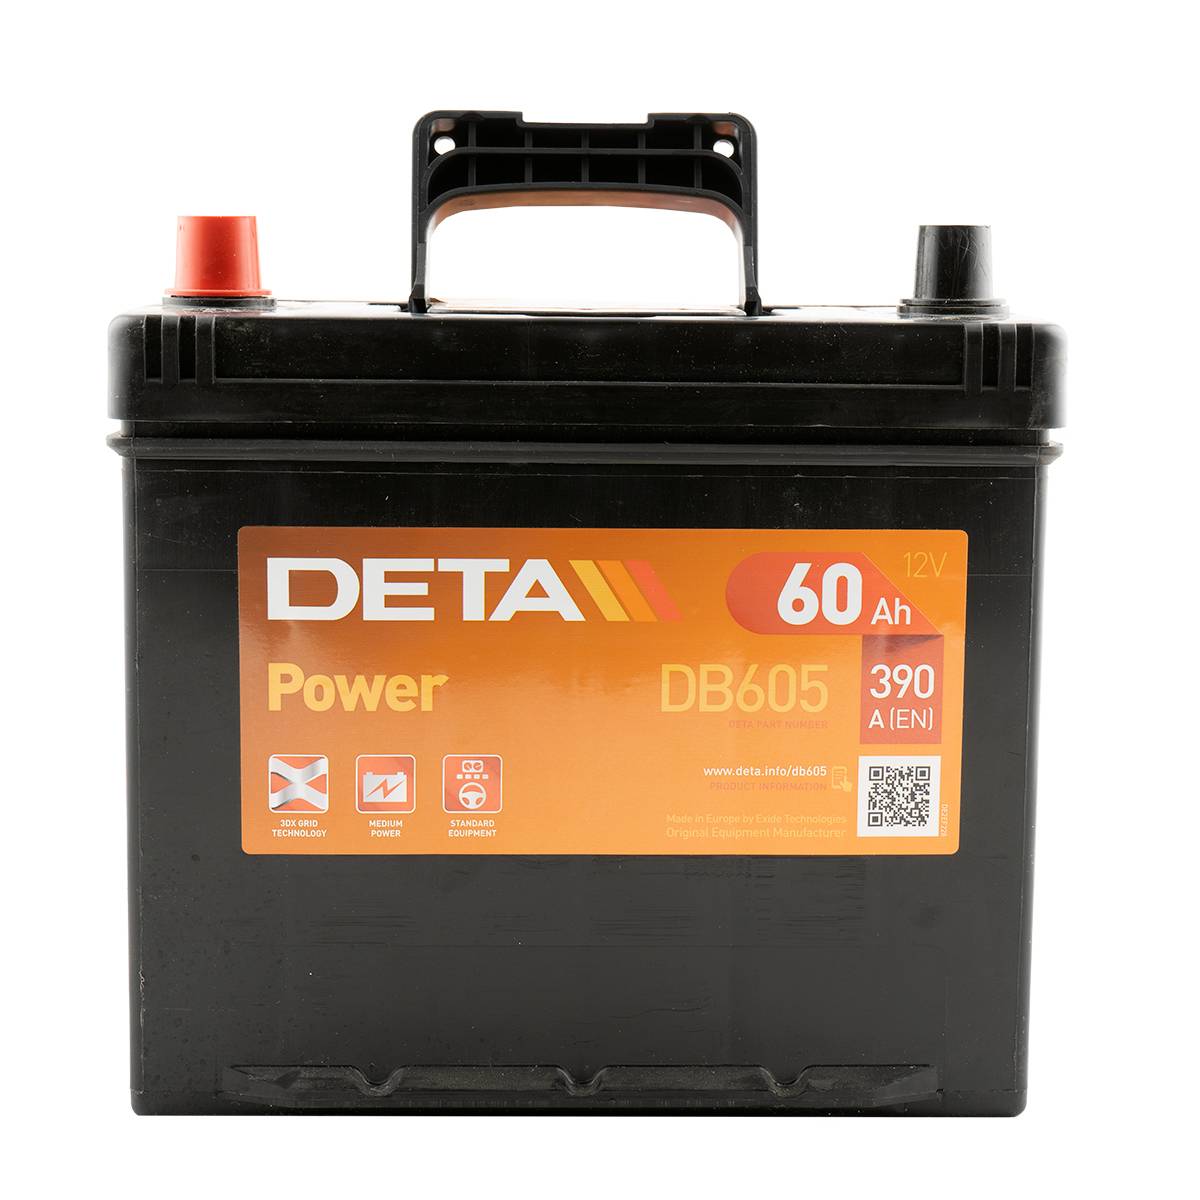 DETA DB605 Power 12V 60Ah 390A Autobatterie, Starterbatterie, Boot, Batterien für